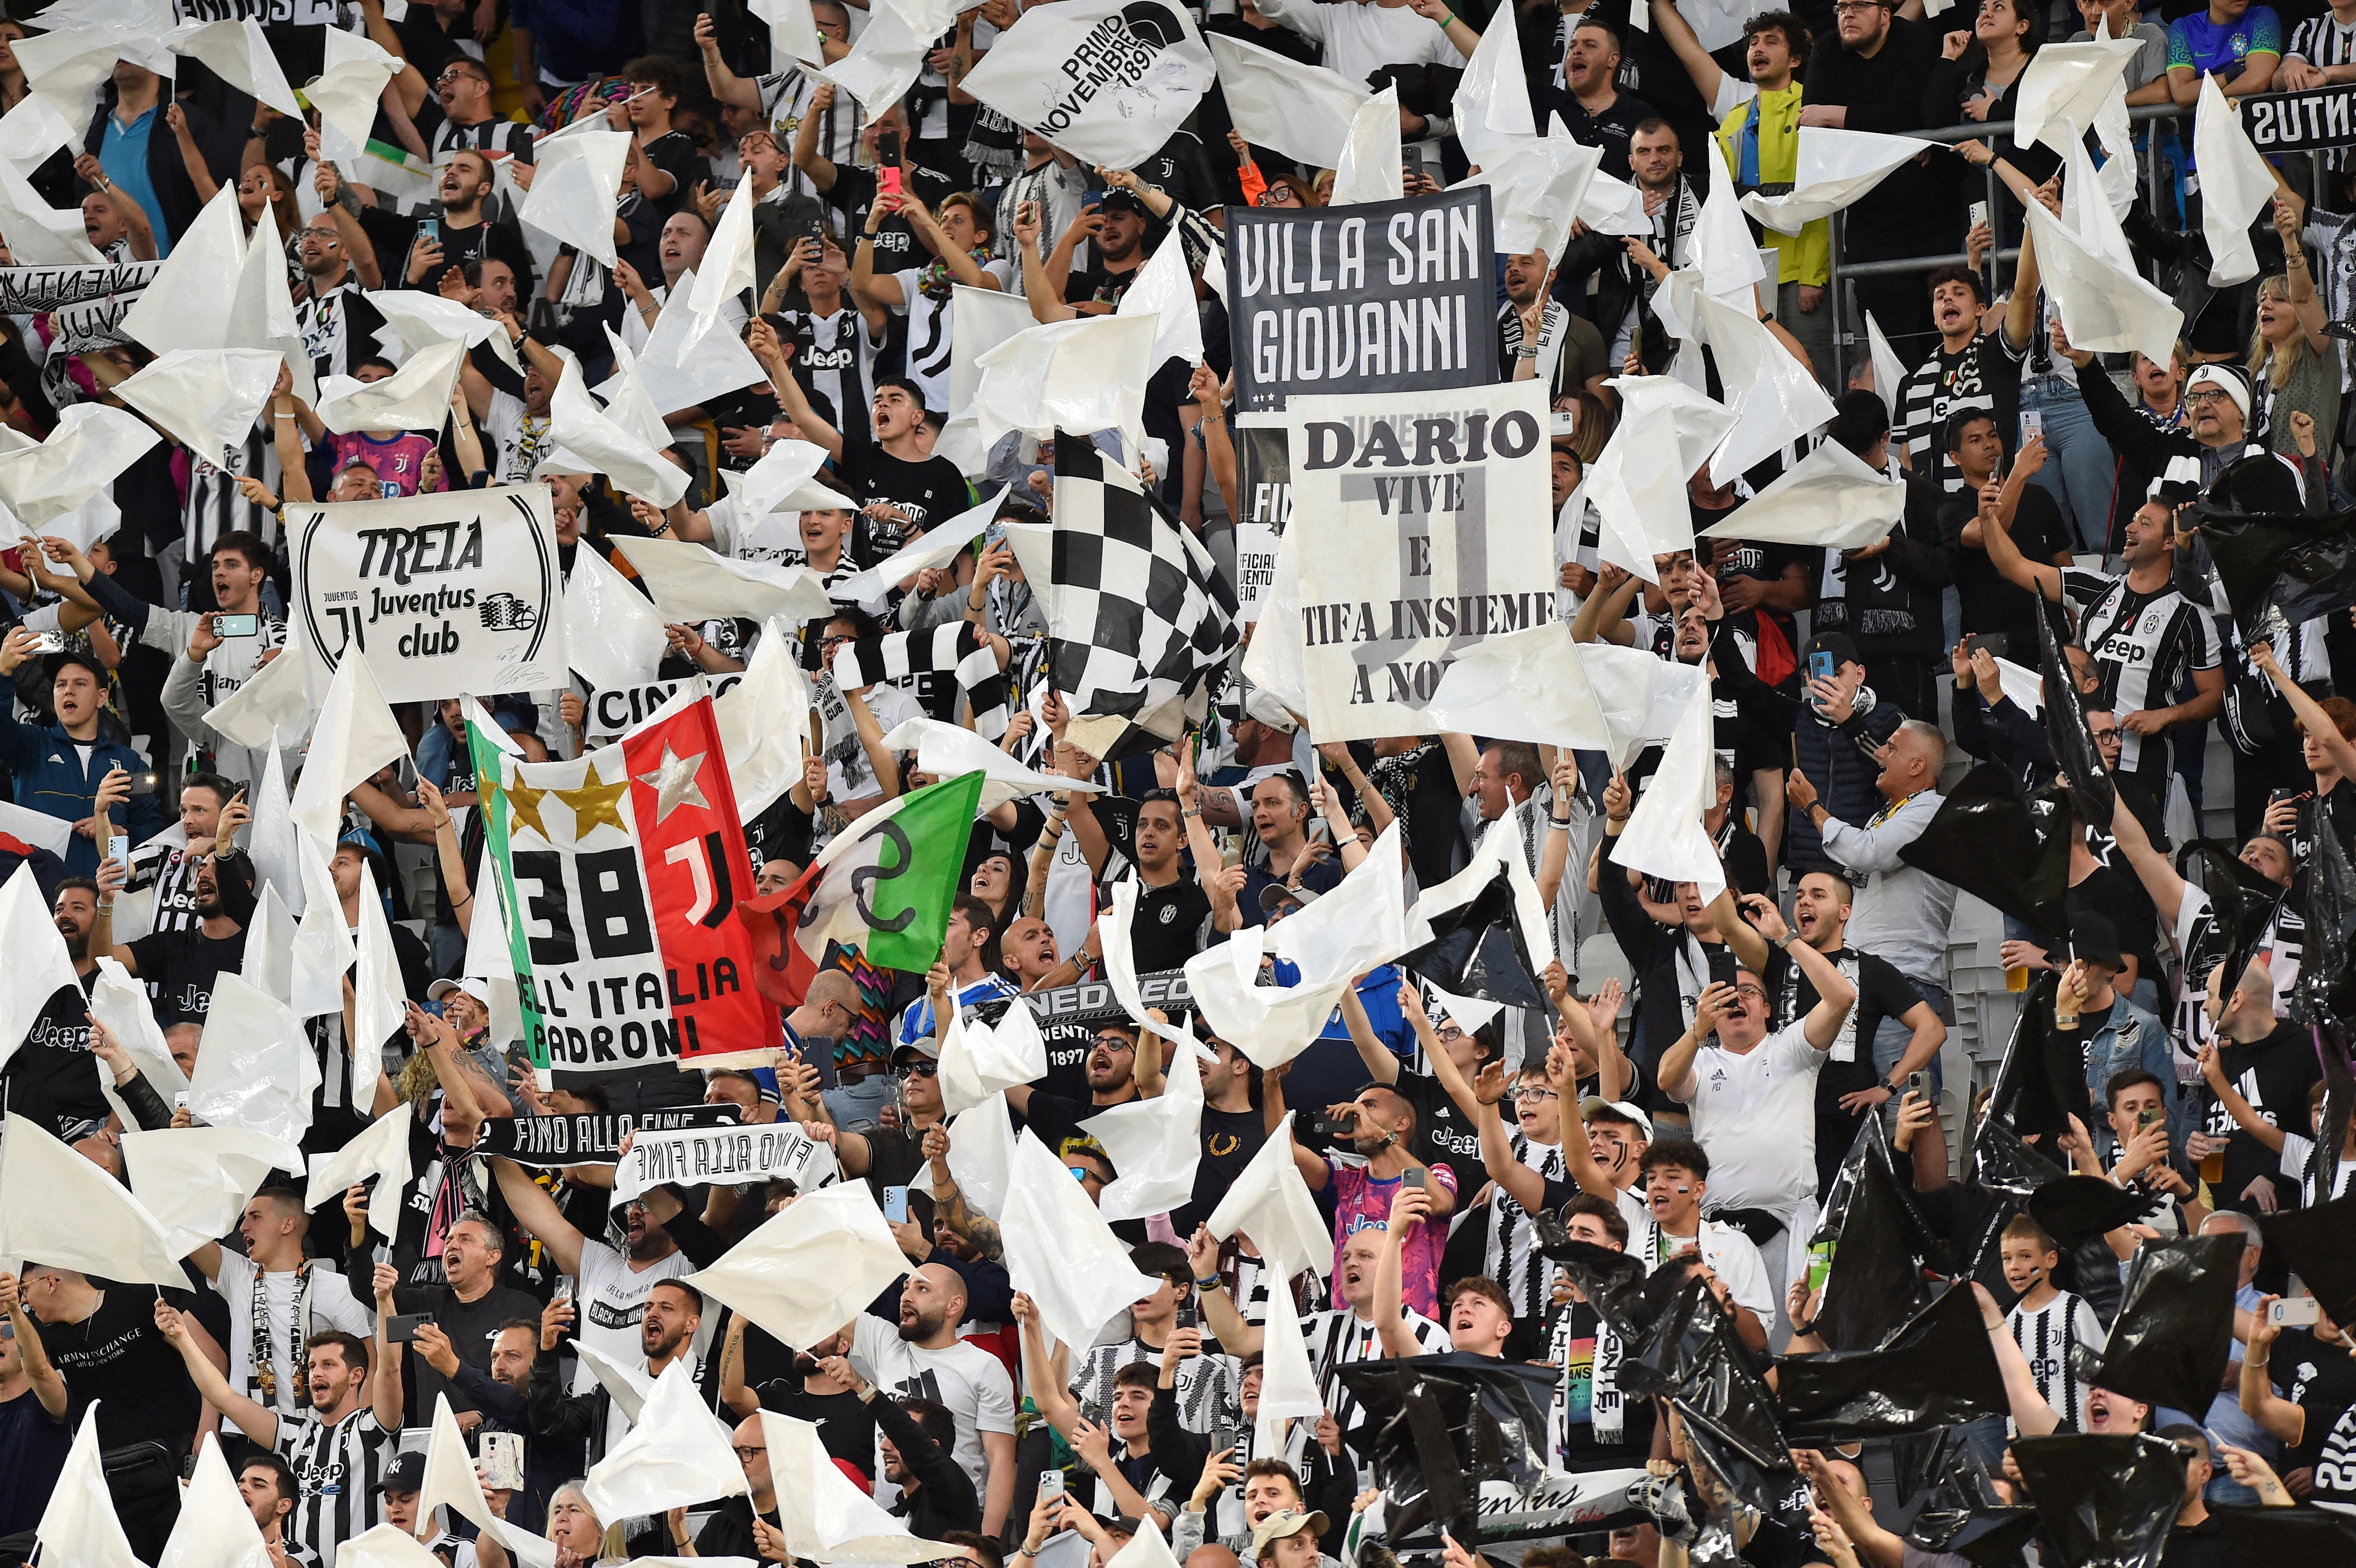 Juventus FC faces fan uprising after launching minimal new logo